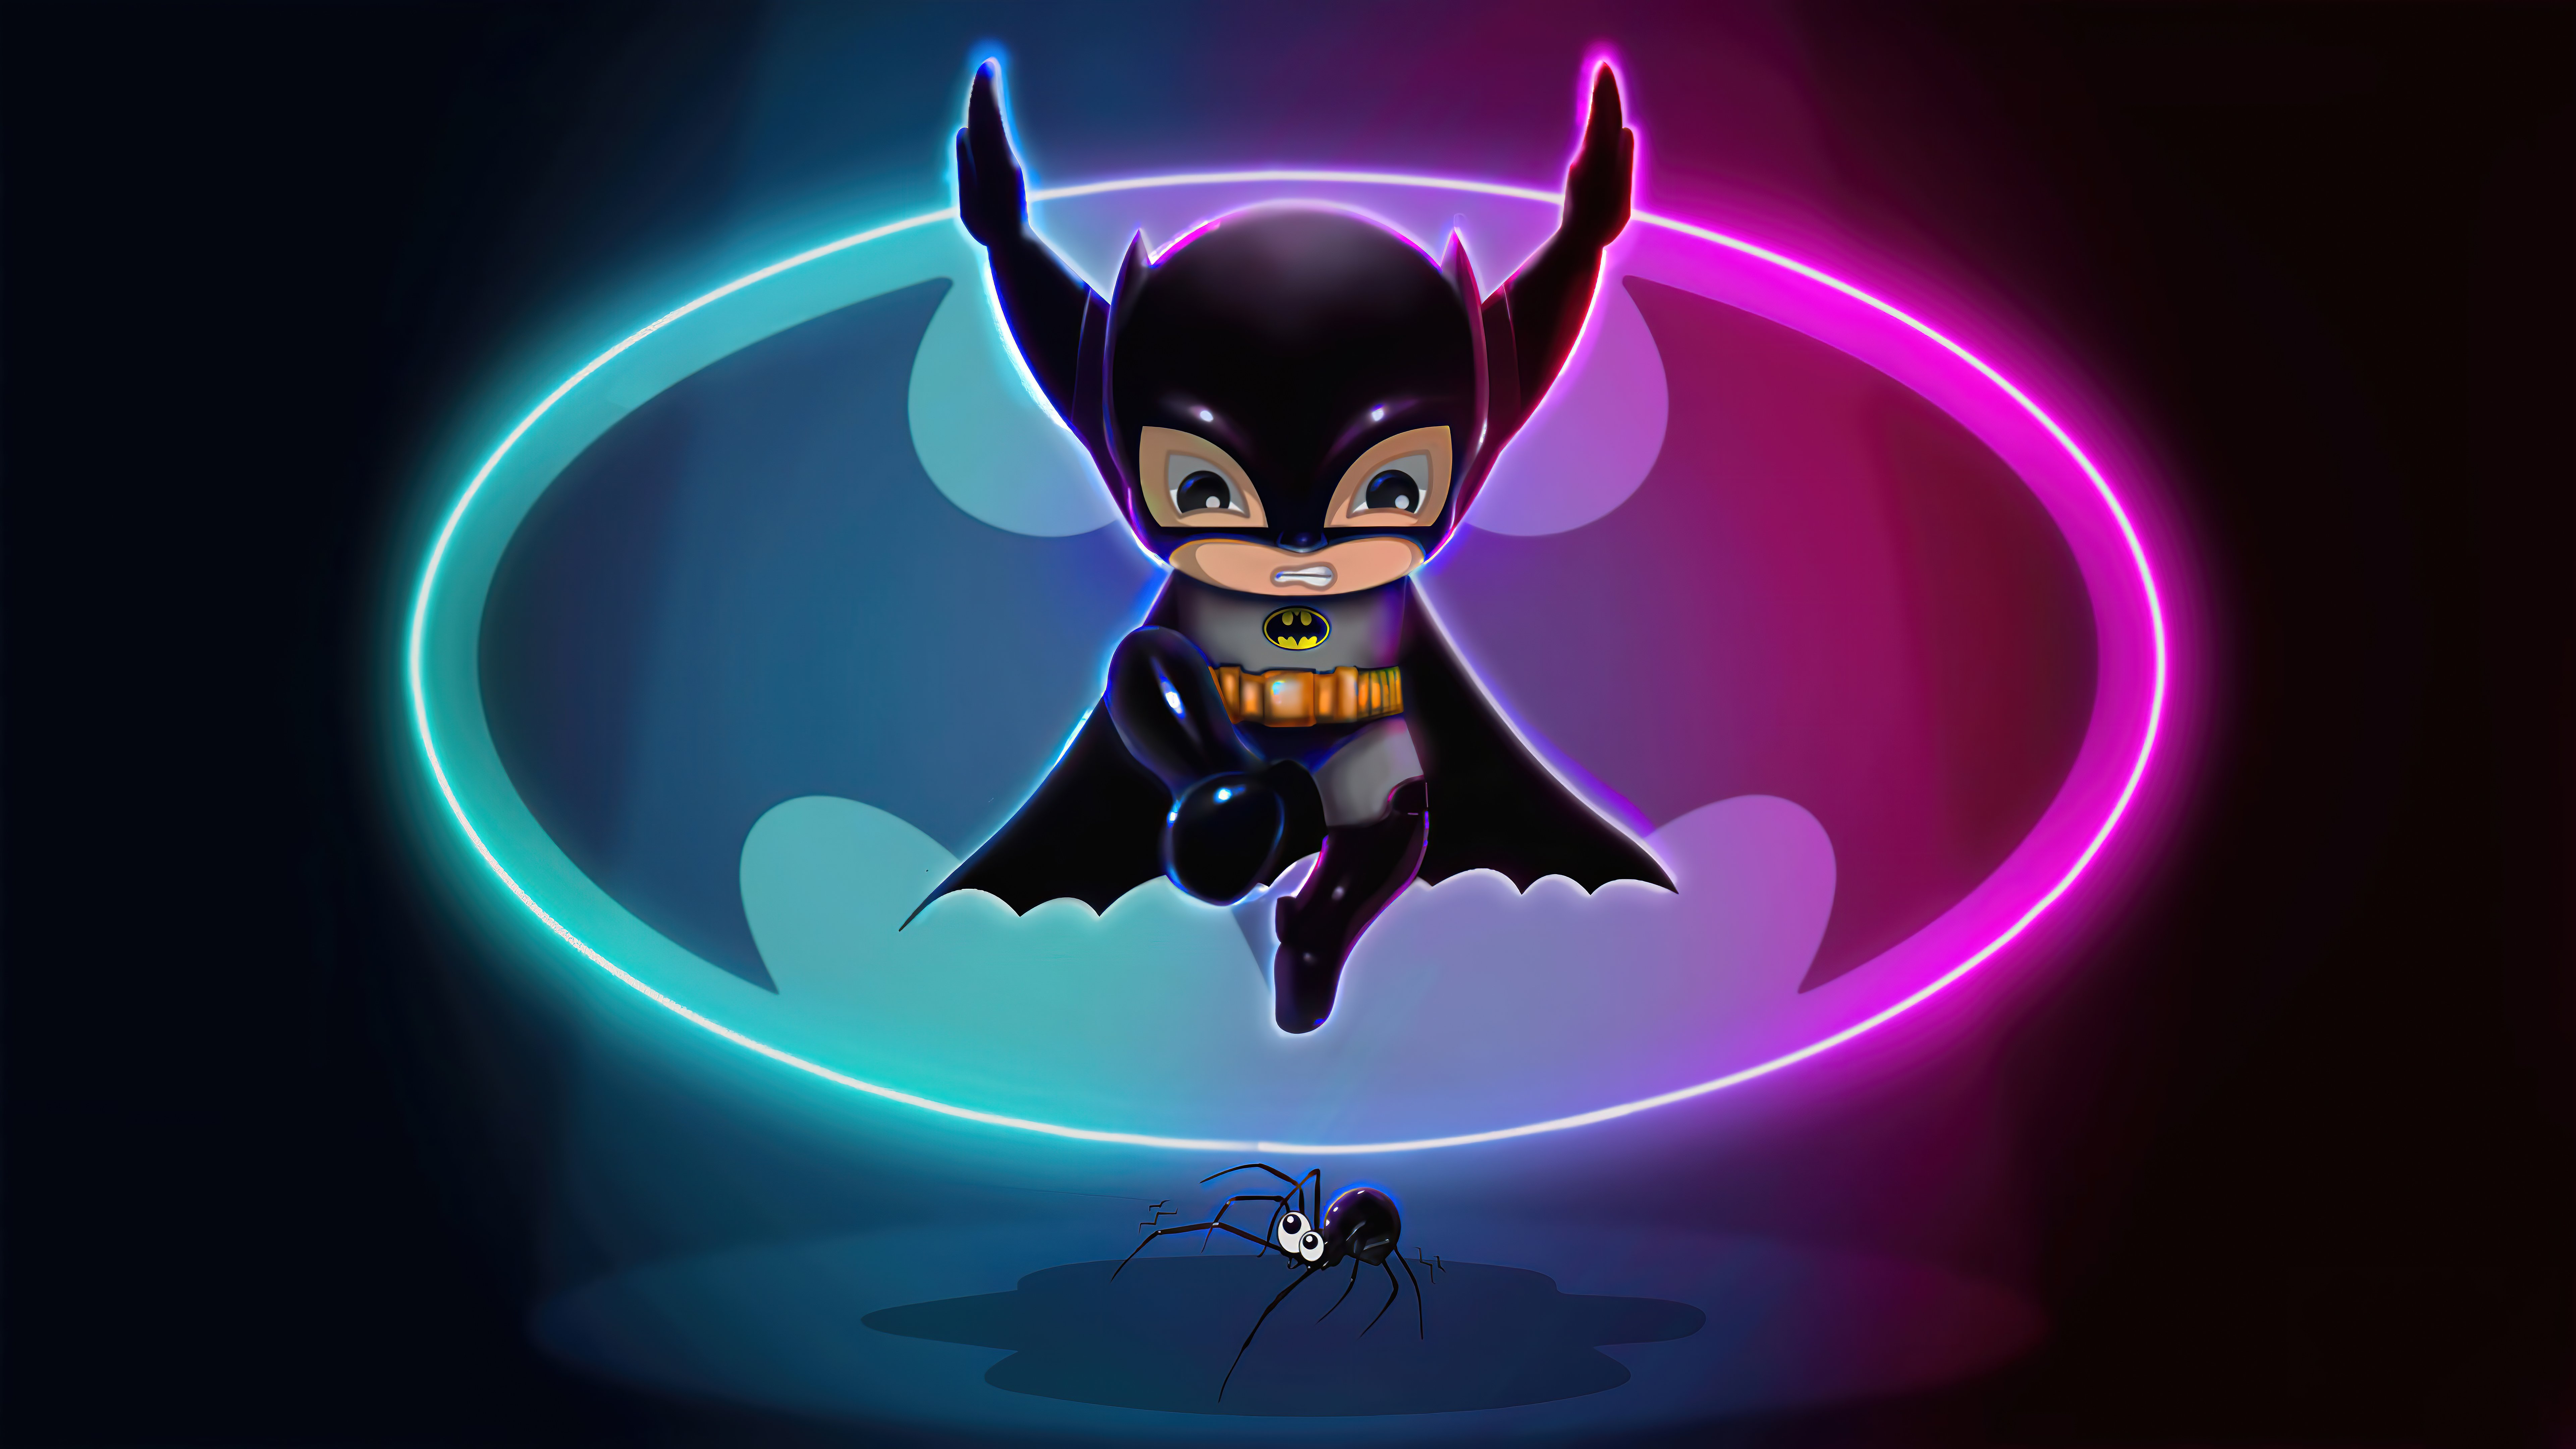 Batman illustration with neon lights Wallpaper 8k Ultra HD